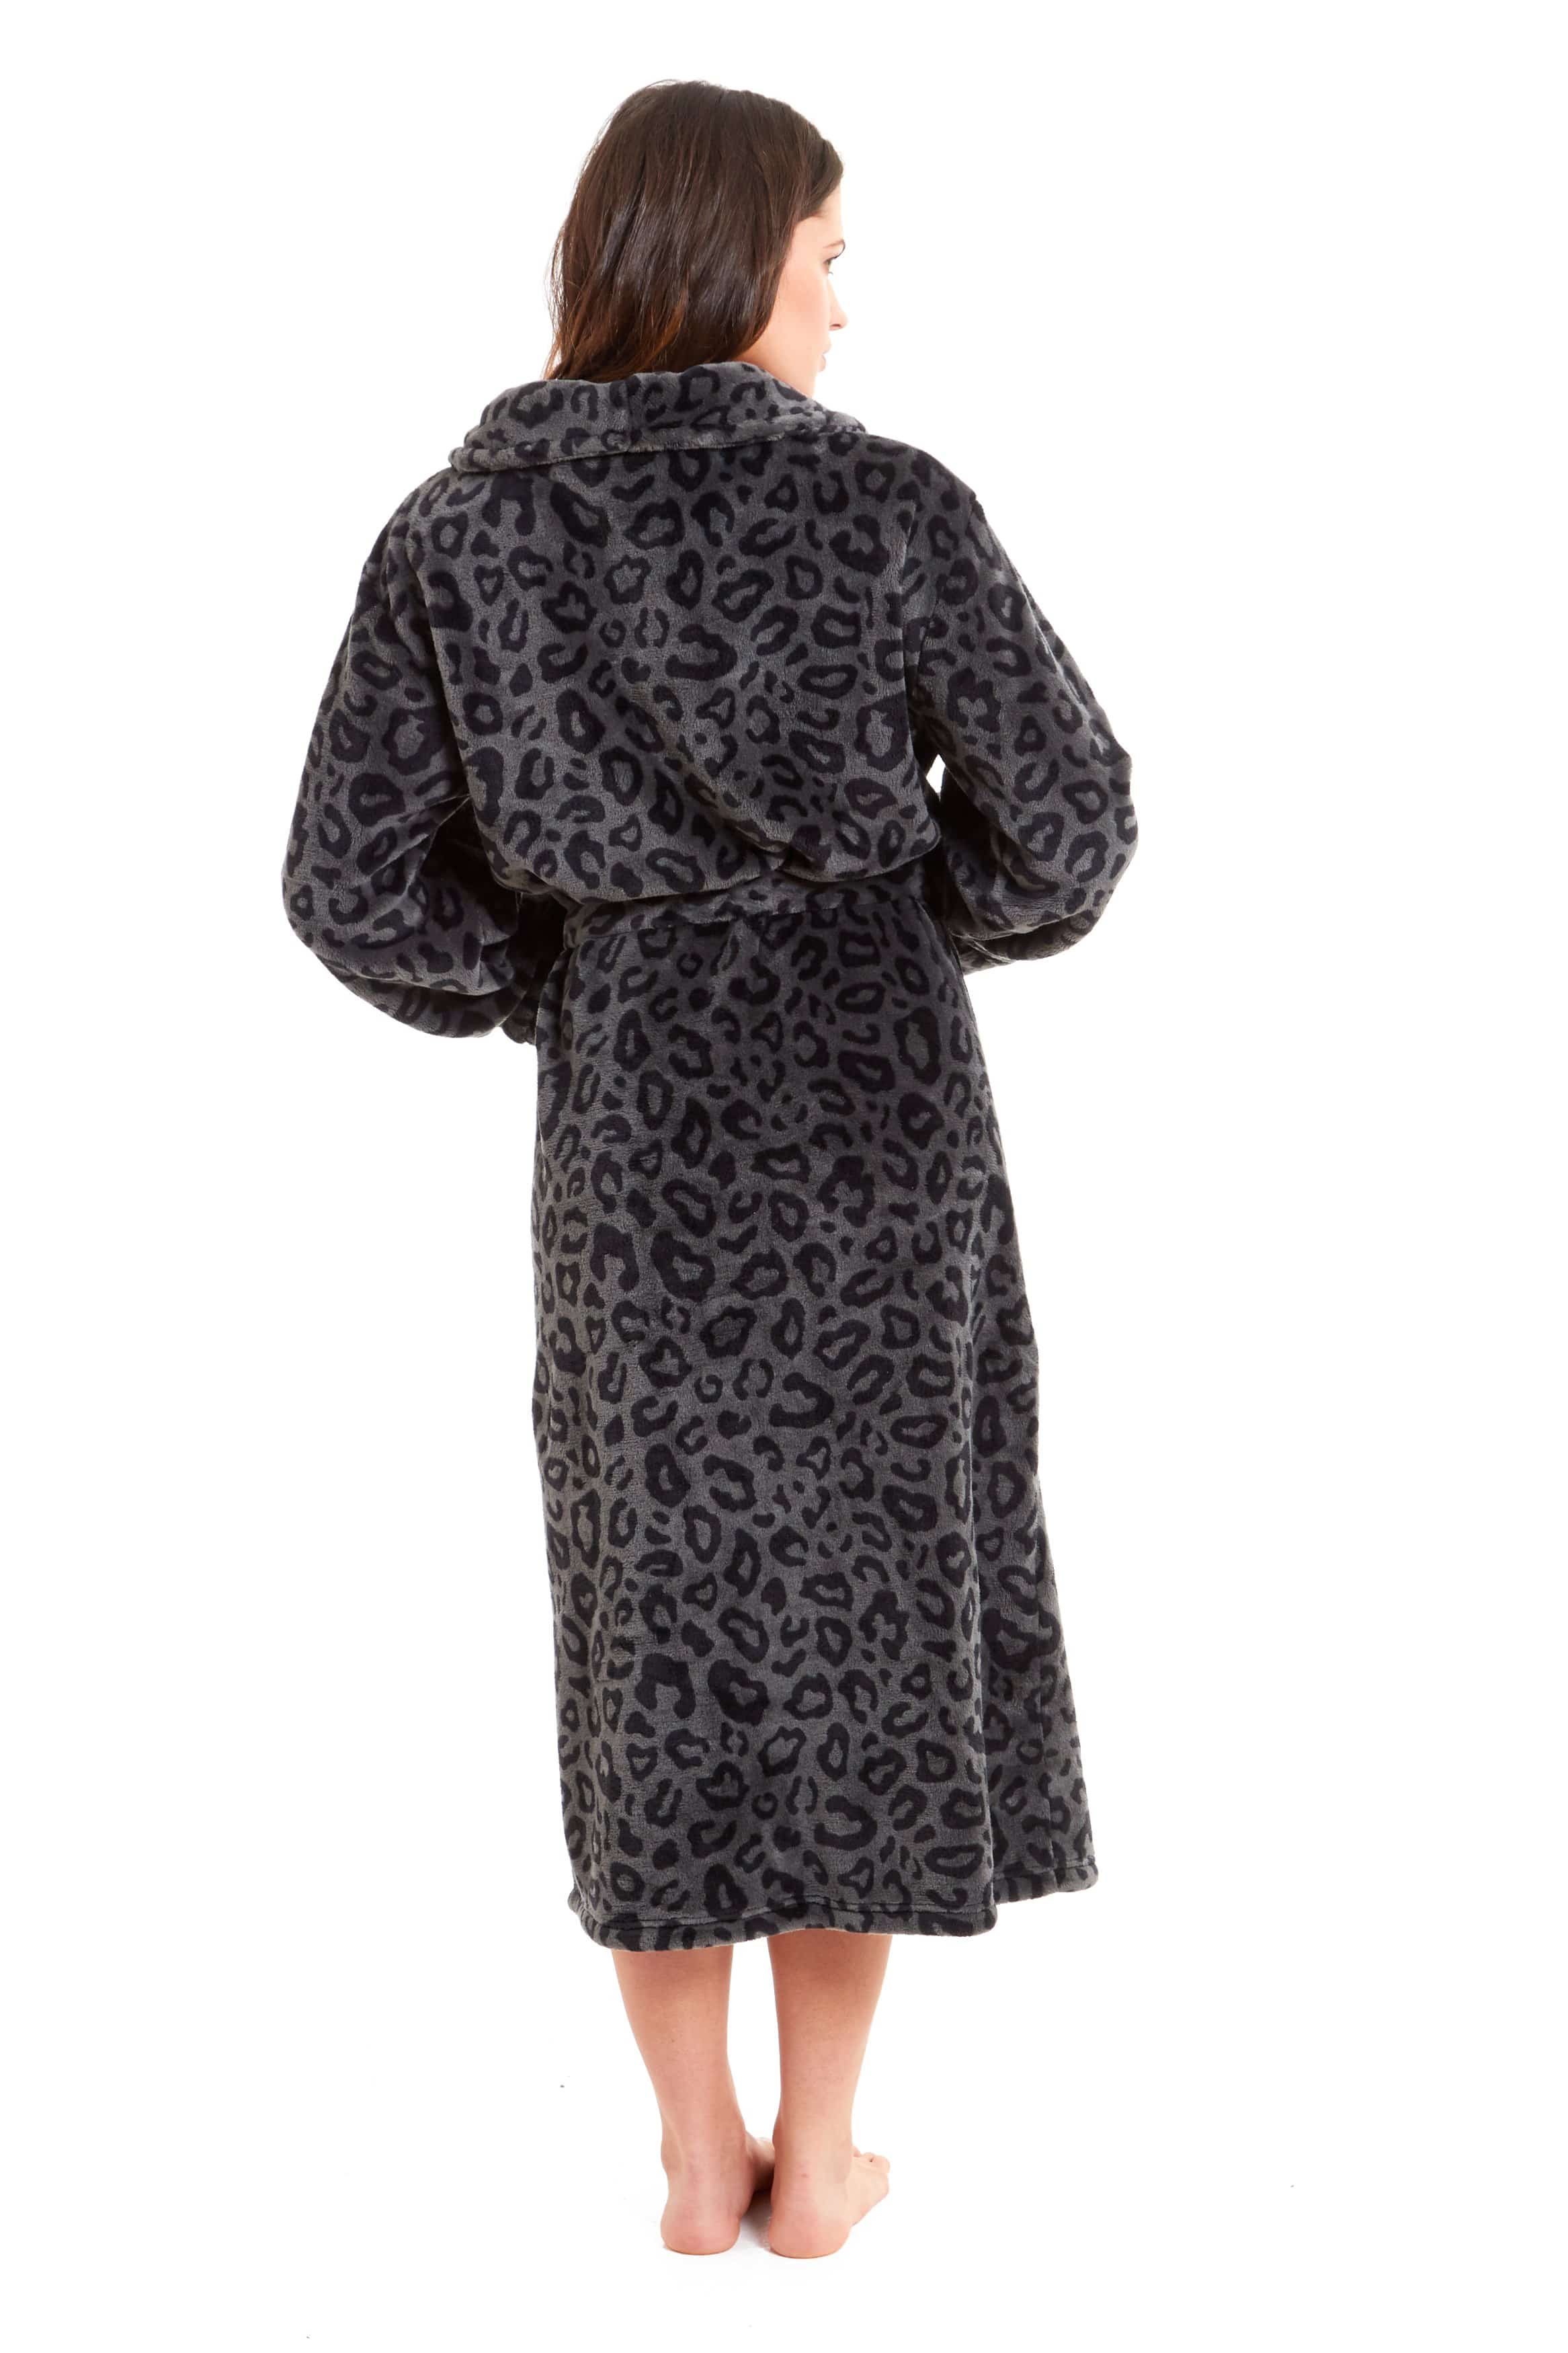 Ladies Super Soft Fleece Robe Fluffy Leopard Print Dressing Gown | eBay